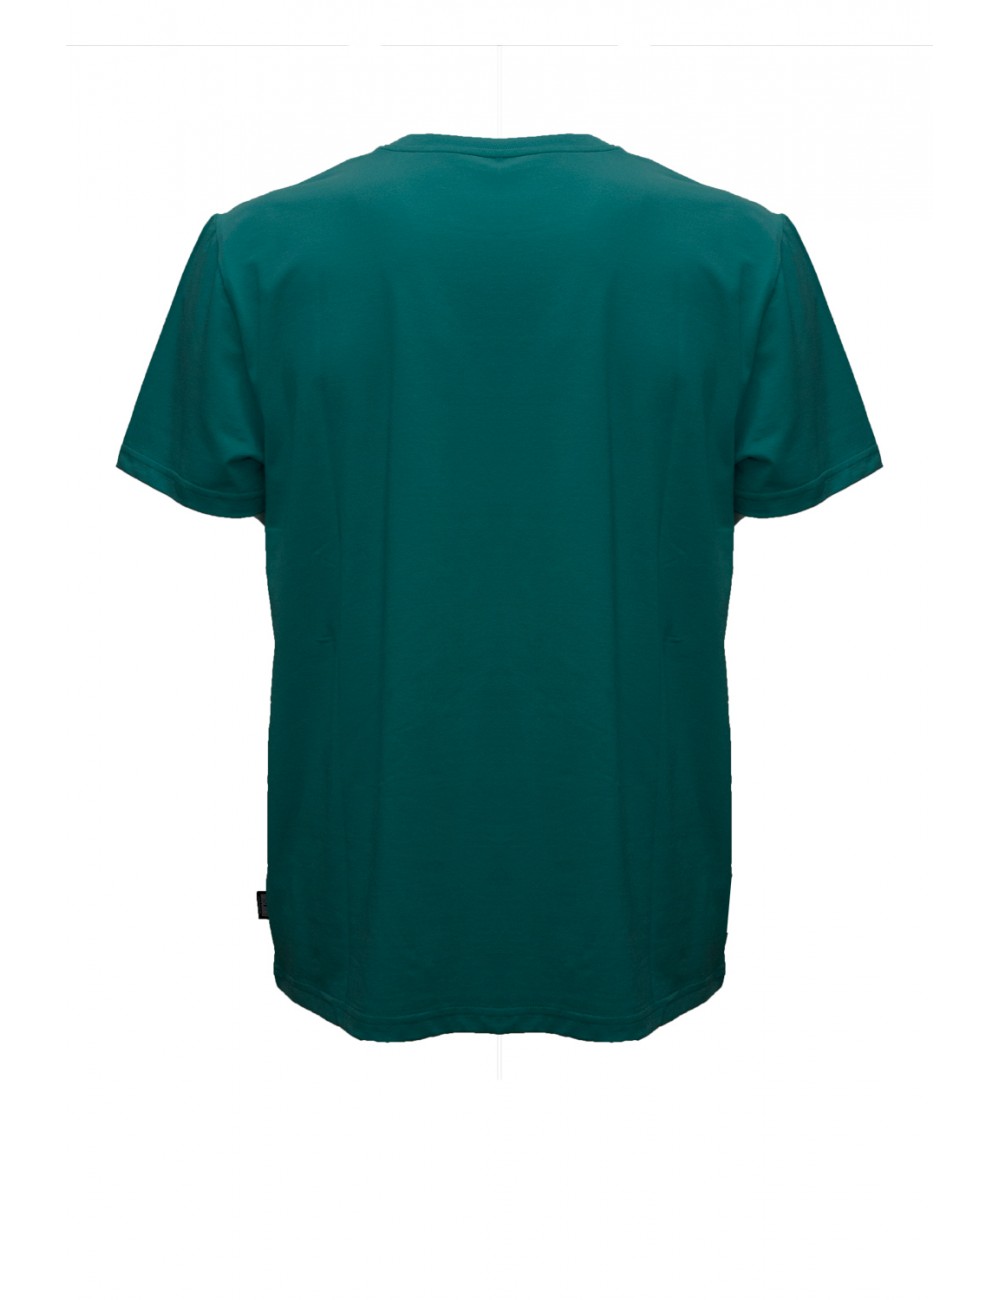 t-shirt moschino UOMO TURCHESE 0374 - V1A0703 - 4406 vista frontale